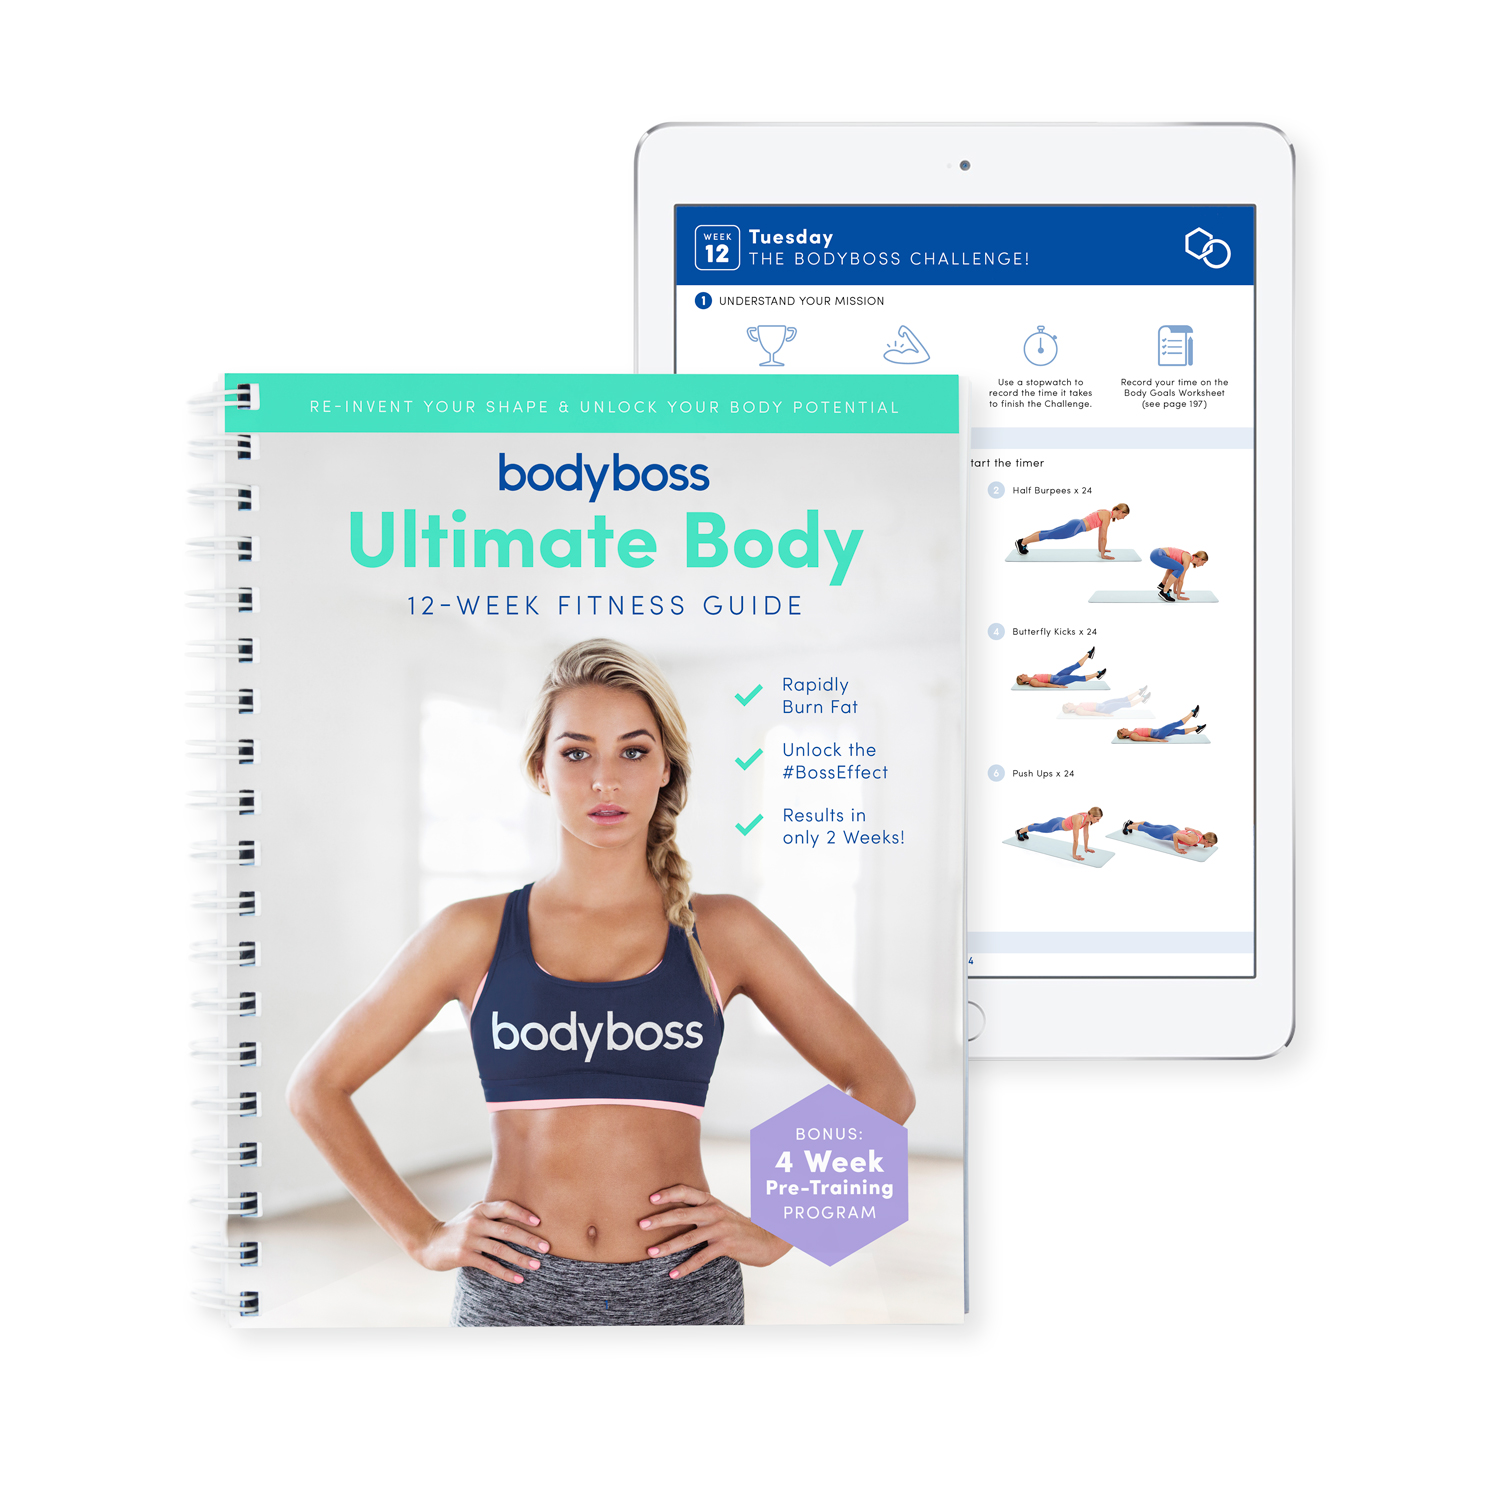 Bodyboss ultimate body guide cover (bodyboss/pa)